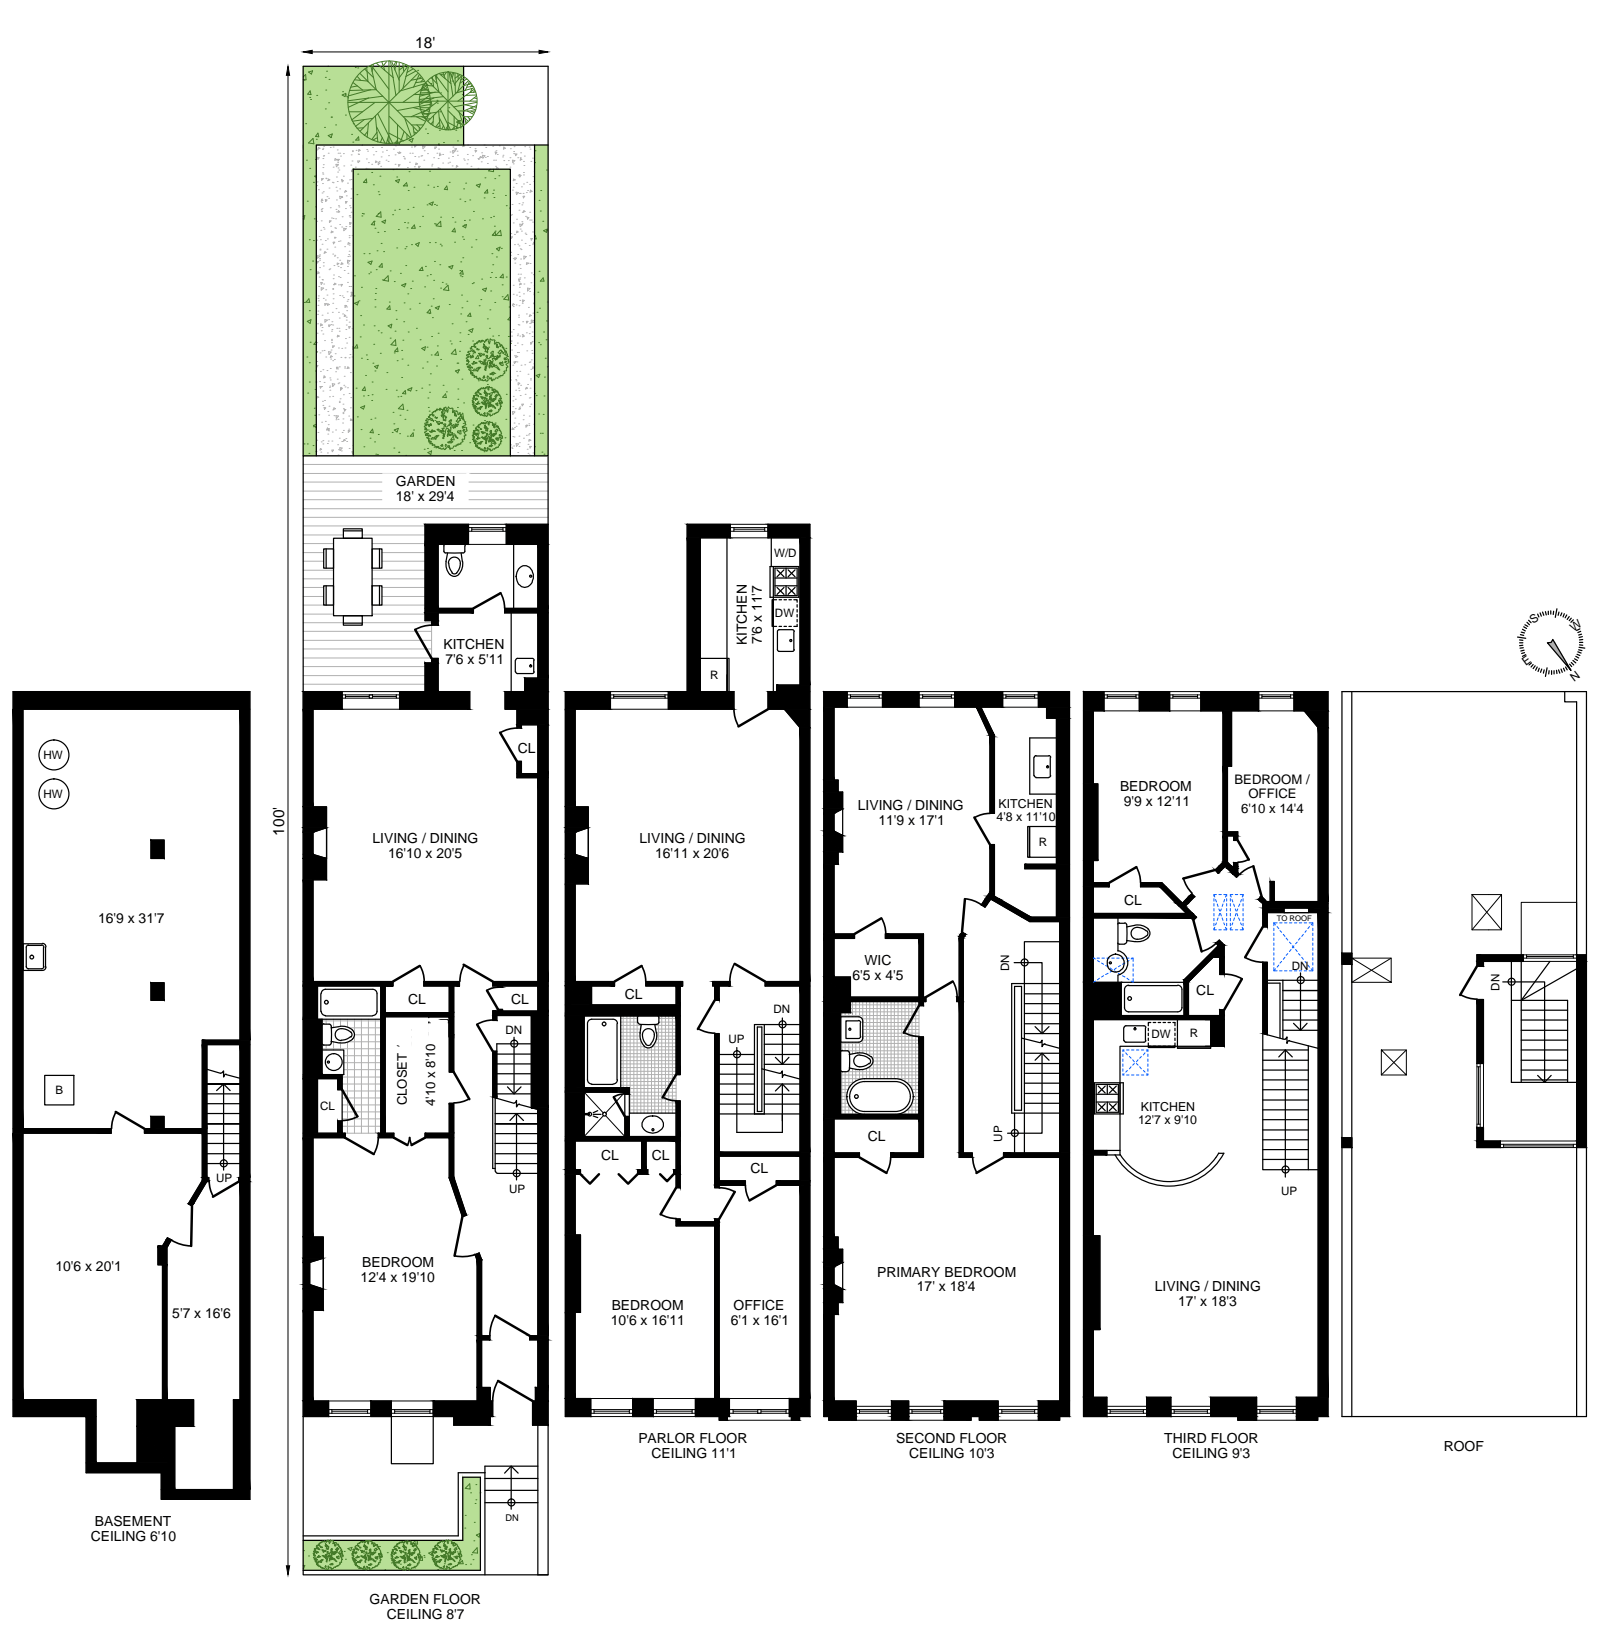 Floorplan for 164 West 88th Street